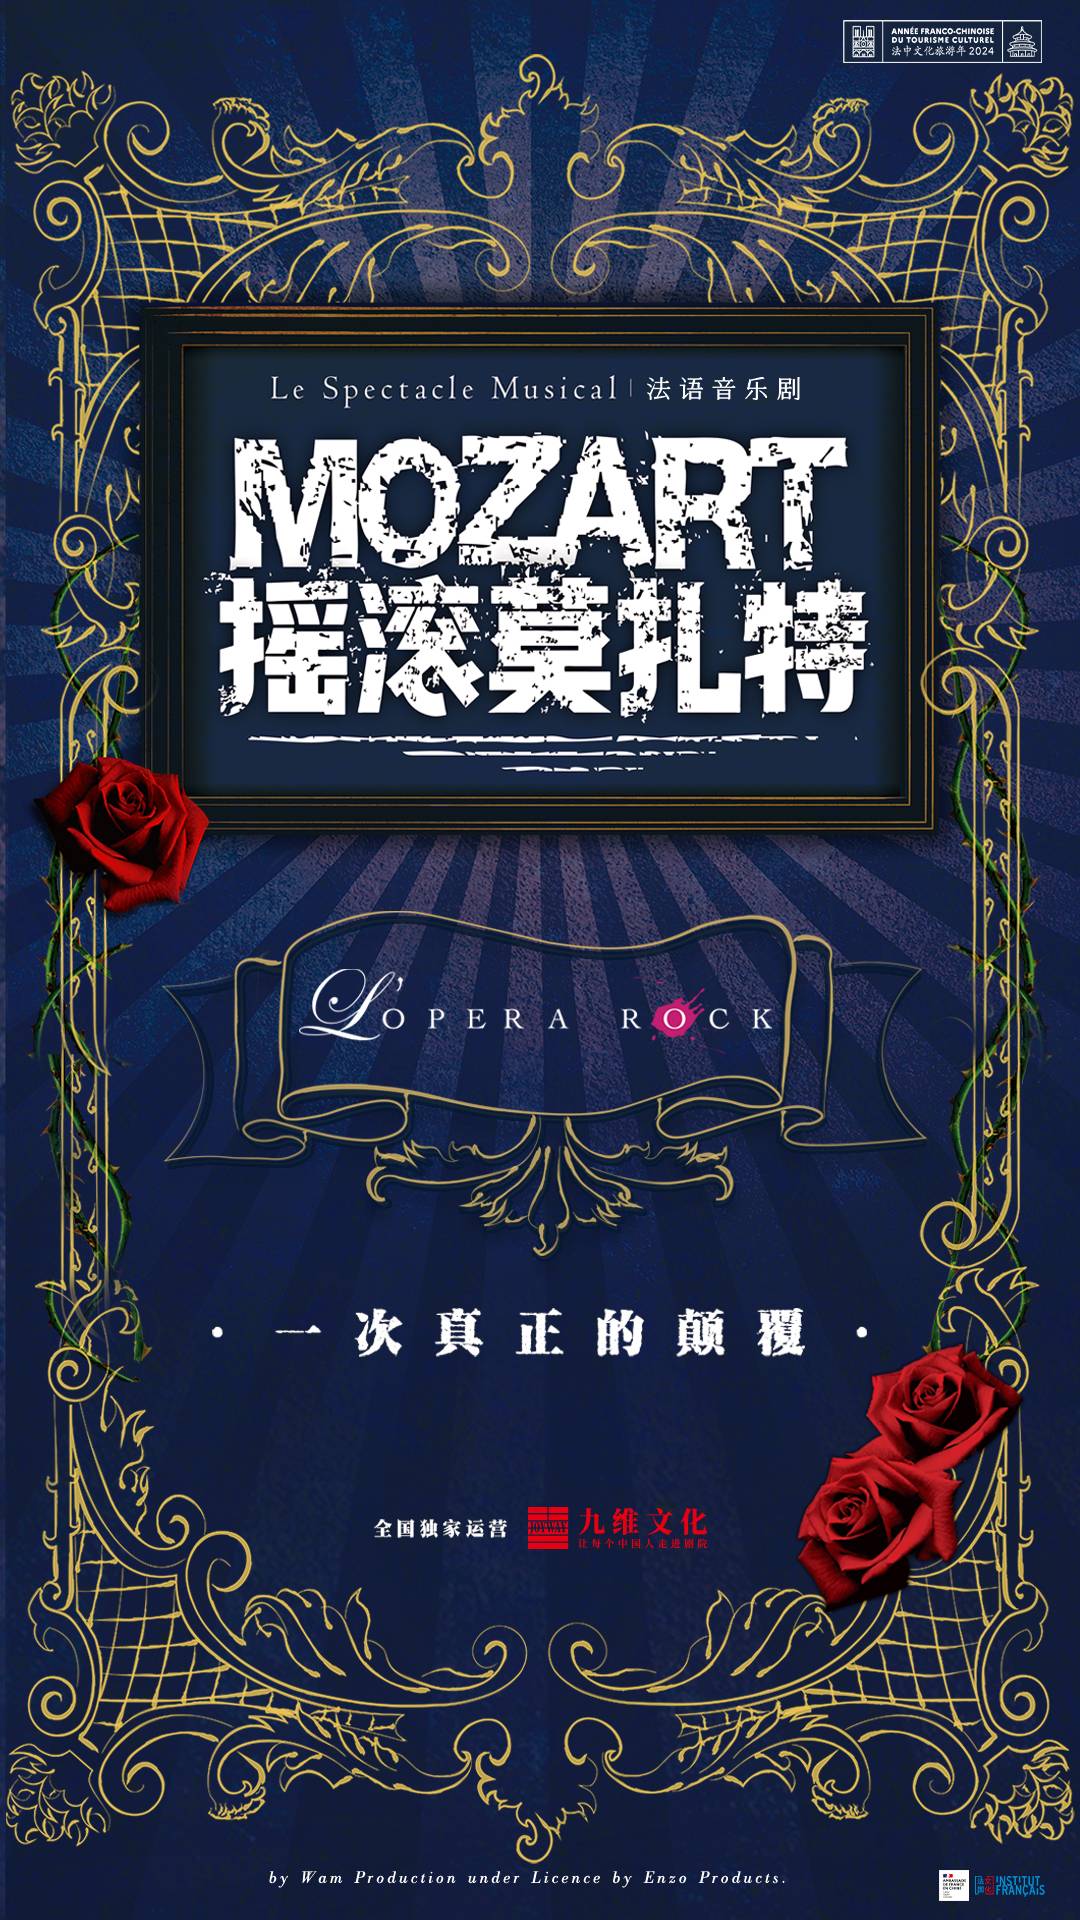 247tickets.com | French Musical: Mozart, L'Opera Rock - Beijing